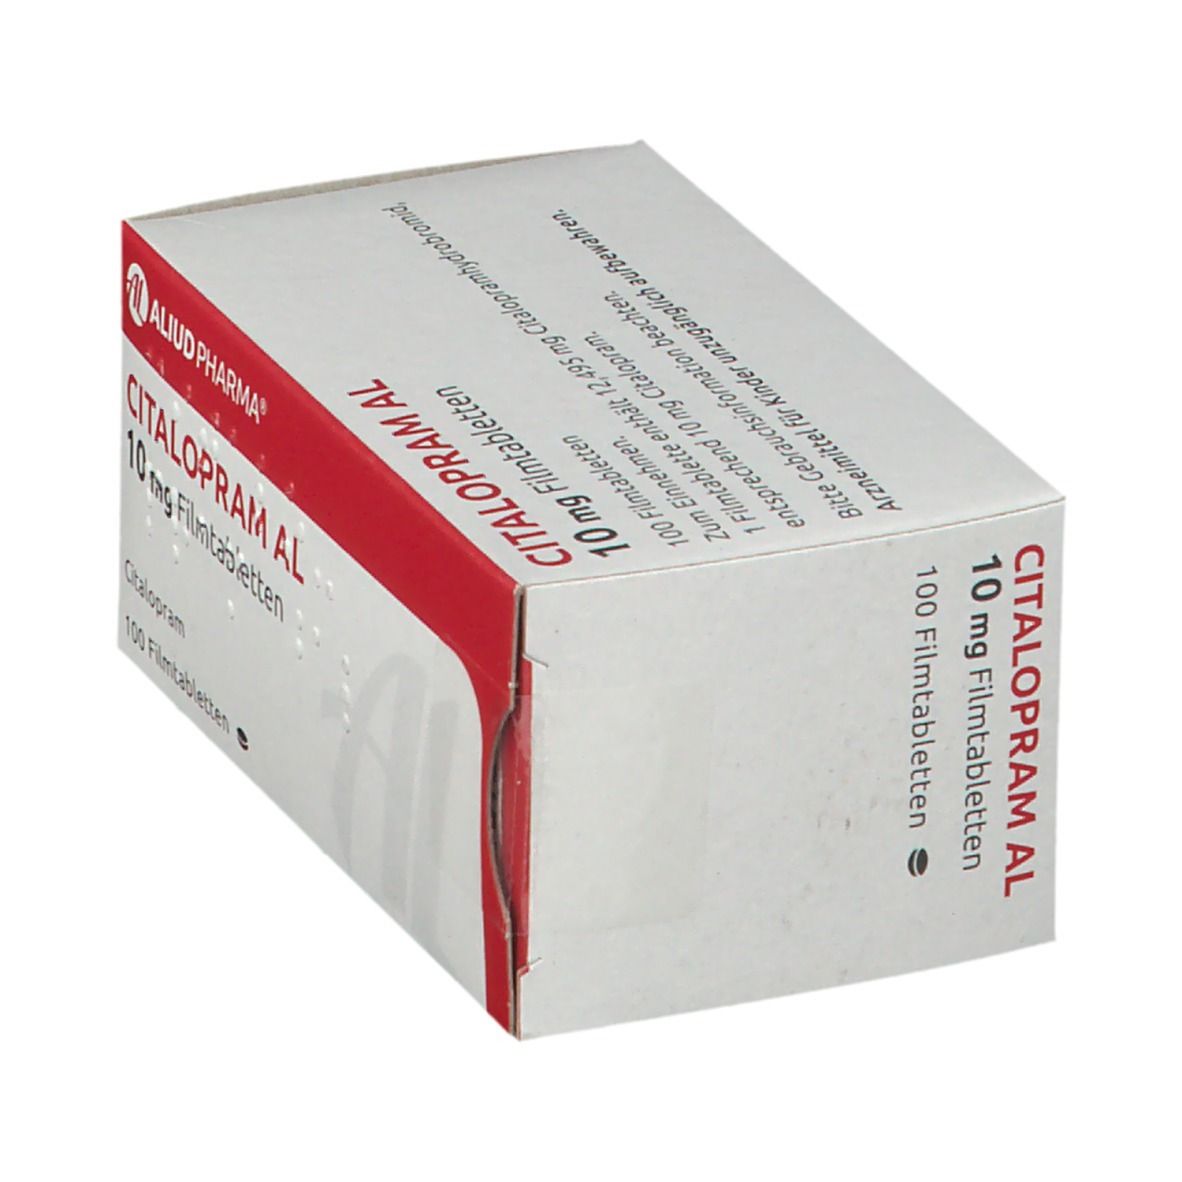 Citalopram AL 10 mg